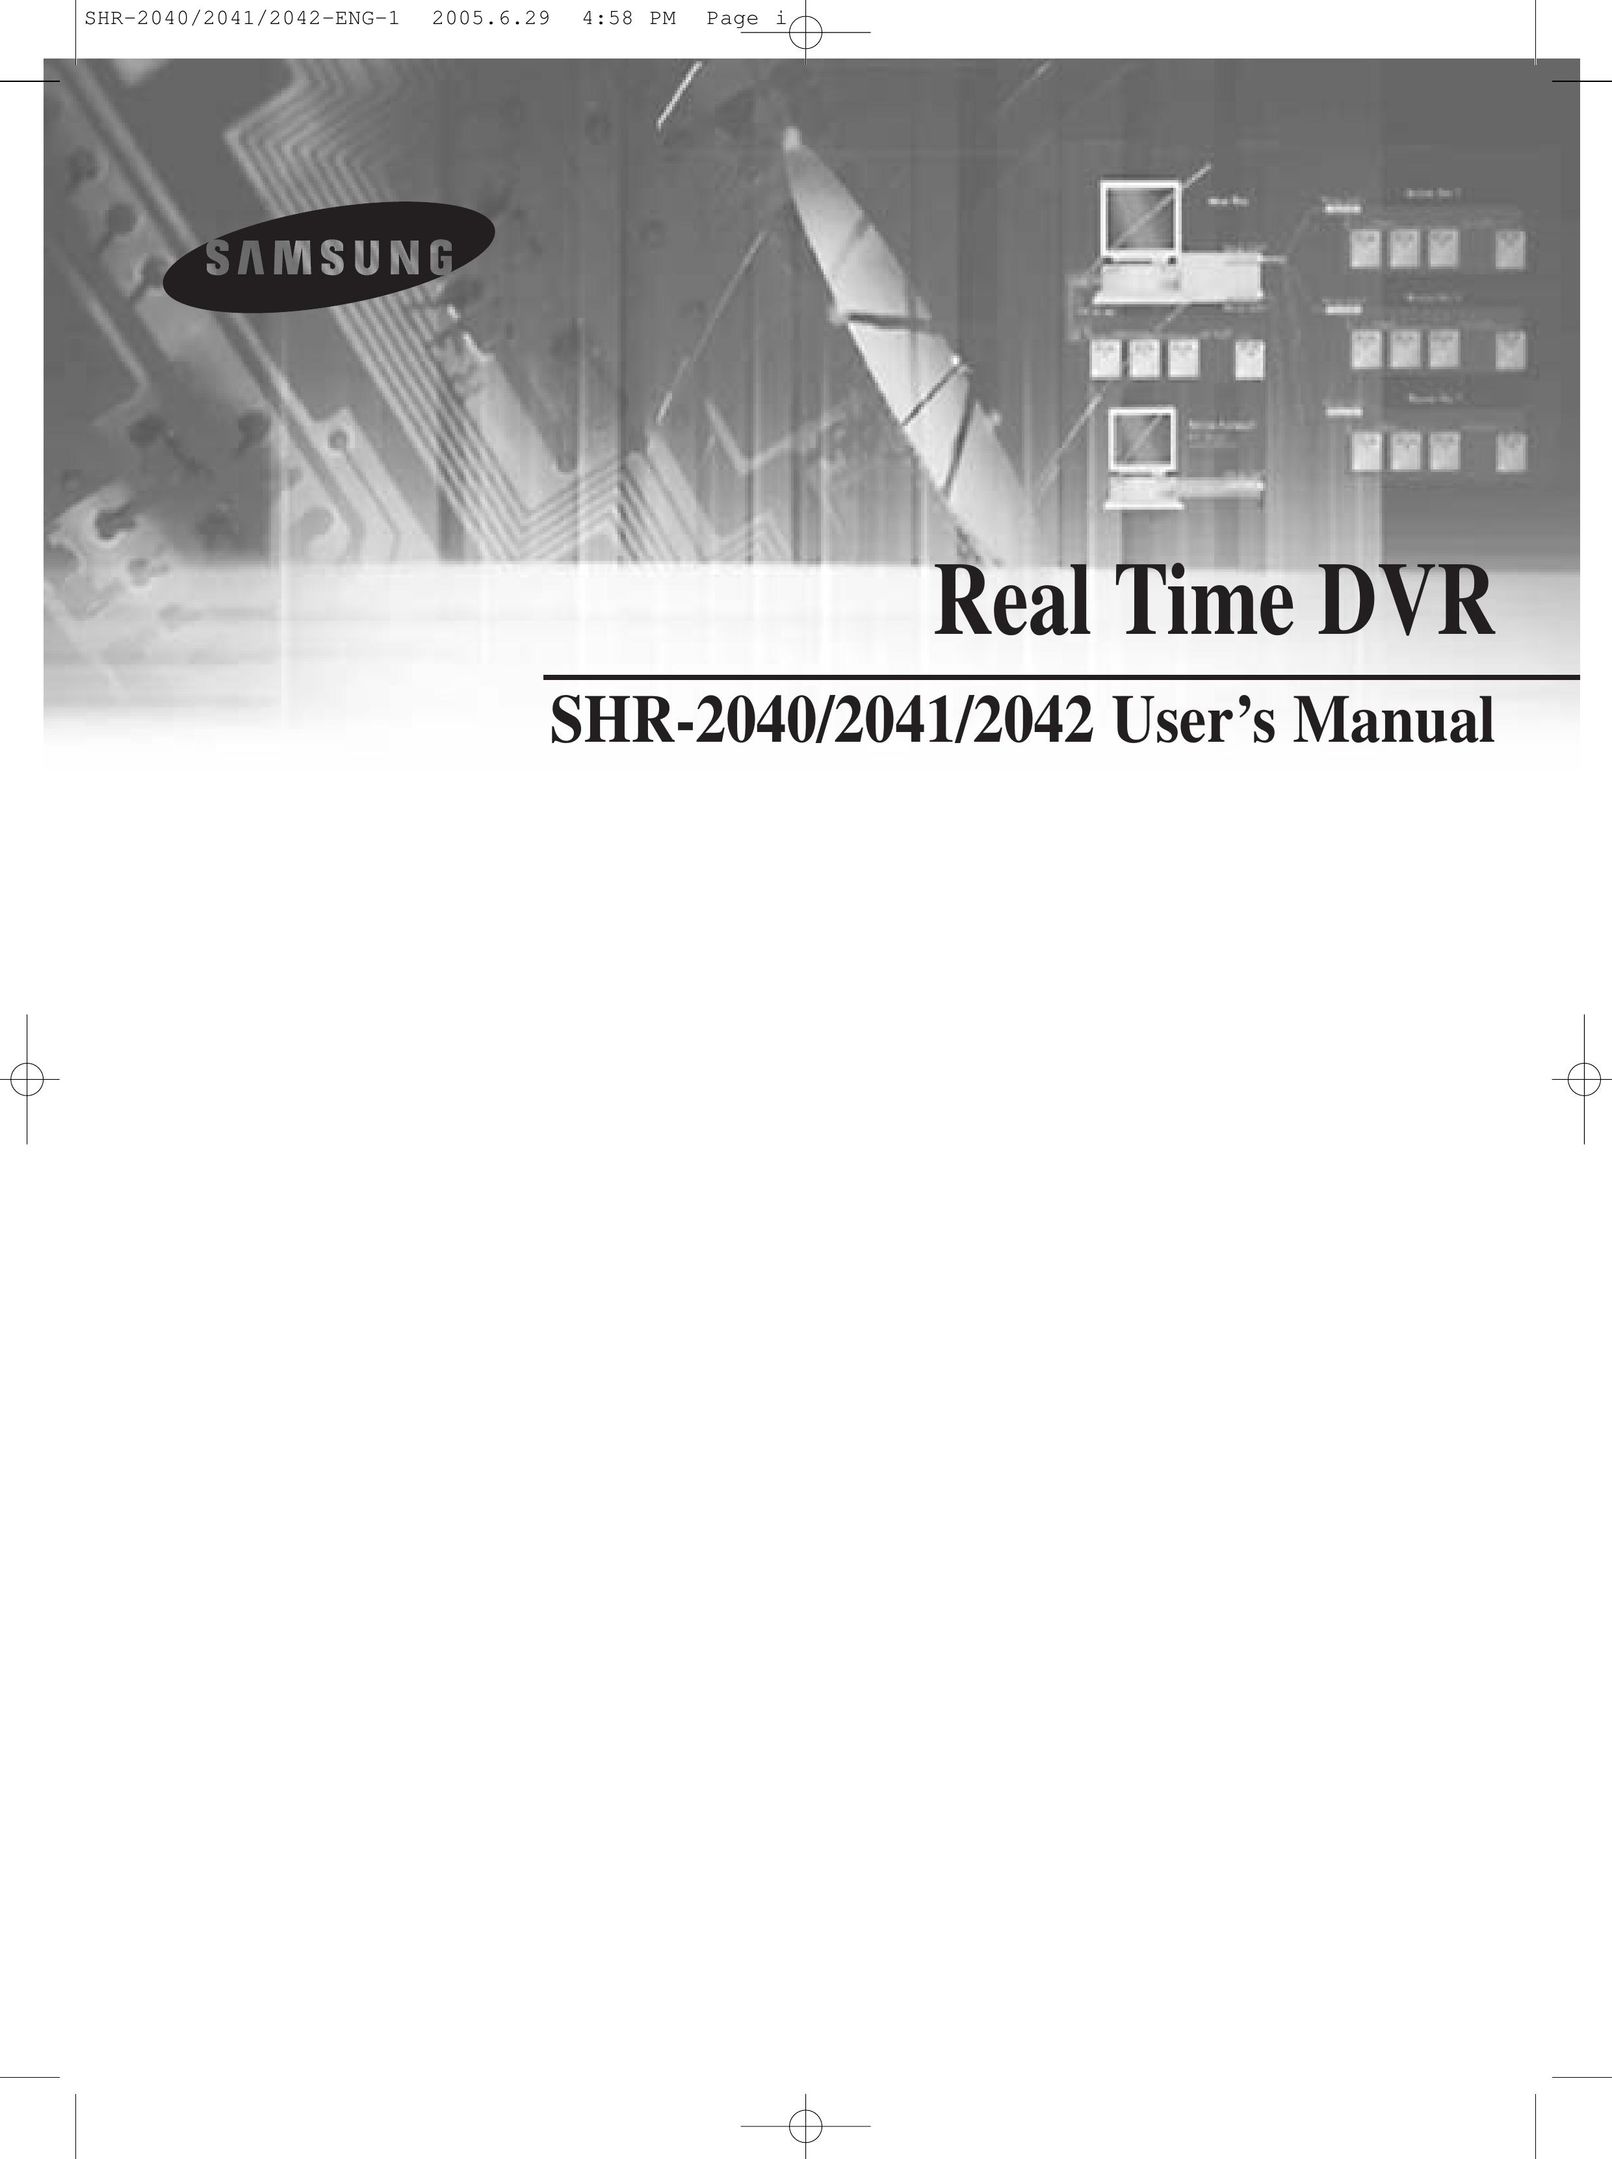 Samsung SHR-2040 DVR User Manual